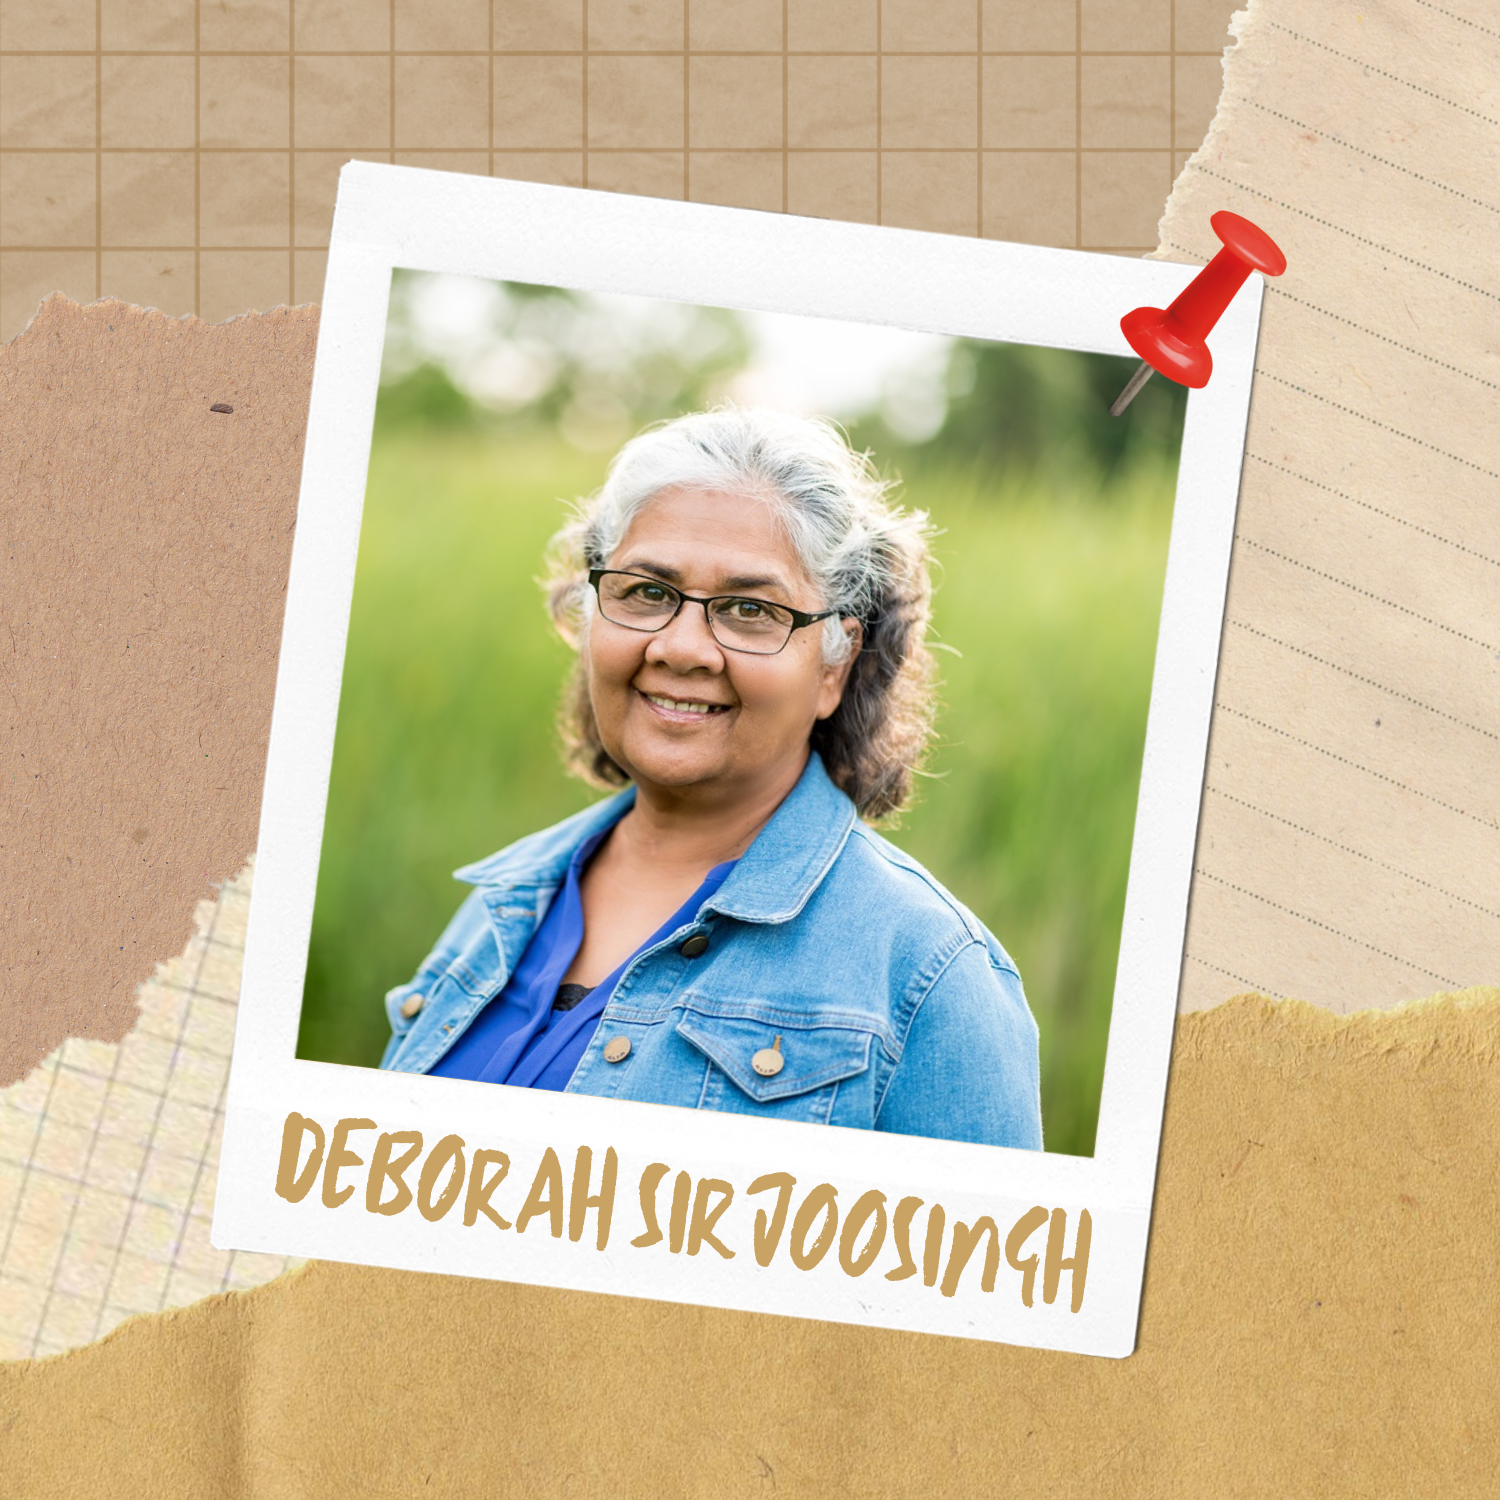 Life Lessons with Missionary Deborah Sirjoosingh